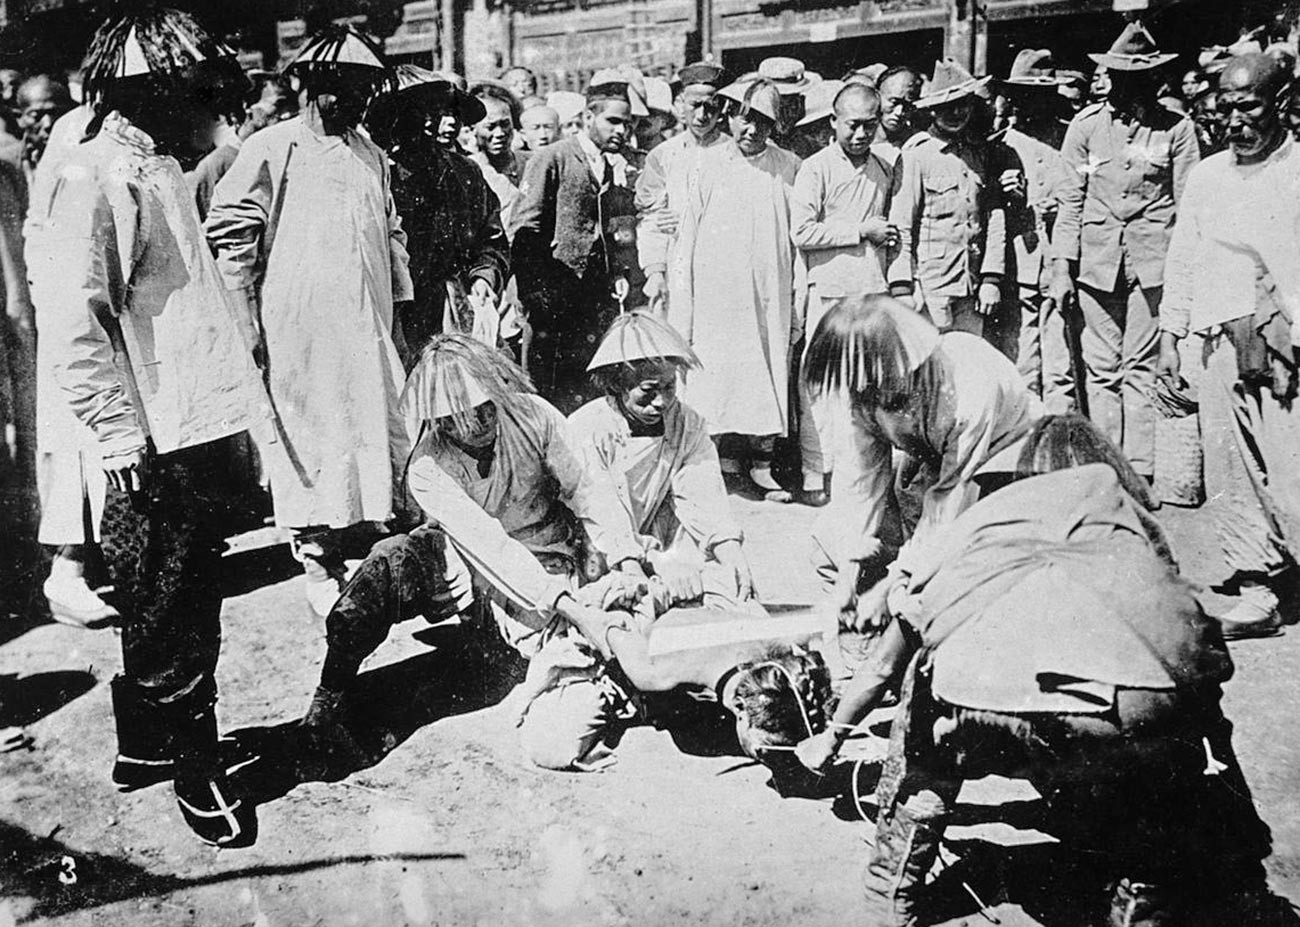 Un pugile decapitato davanti a una folla di cinesi